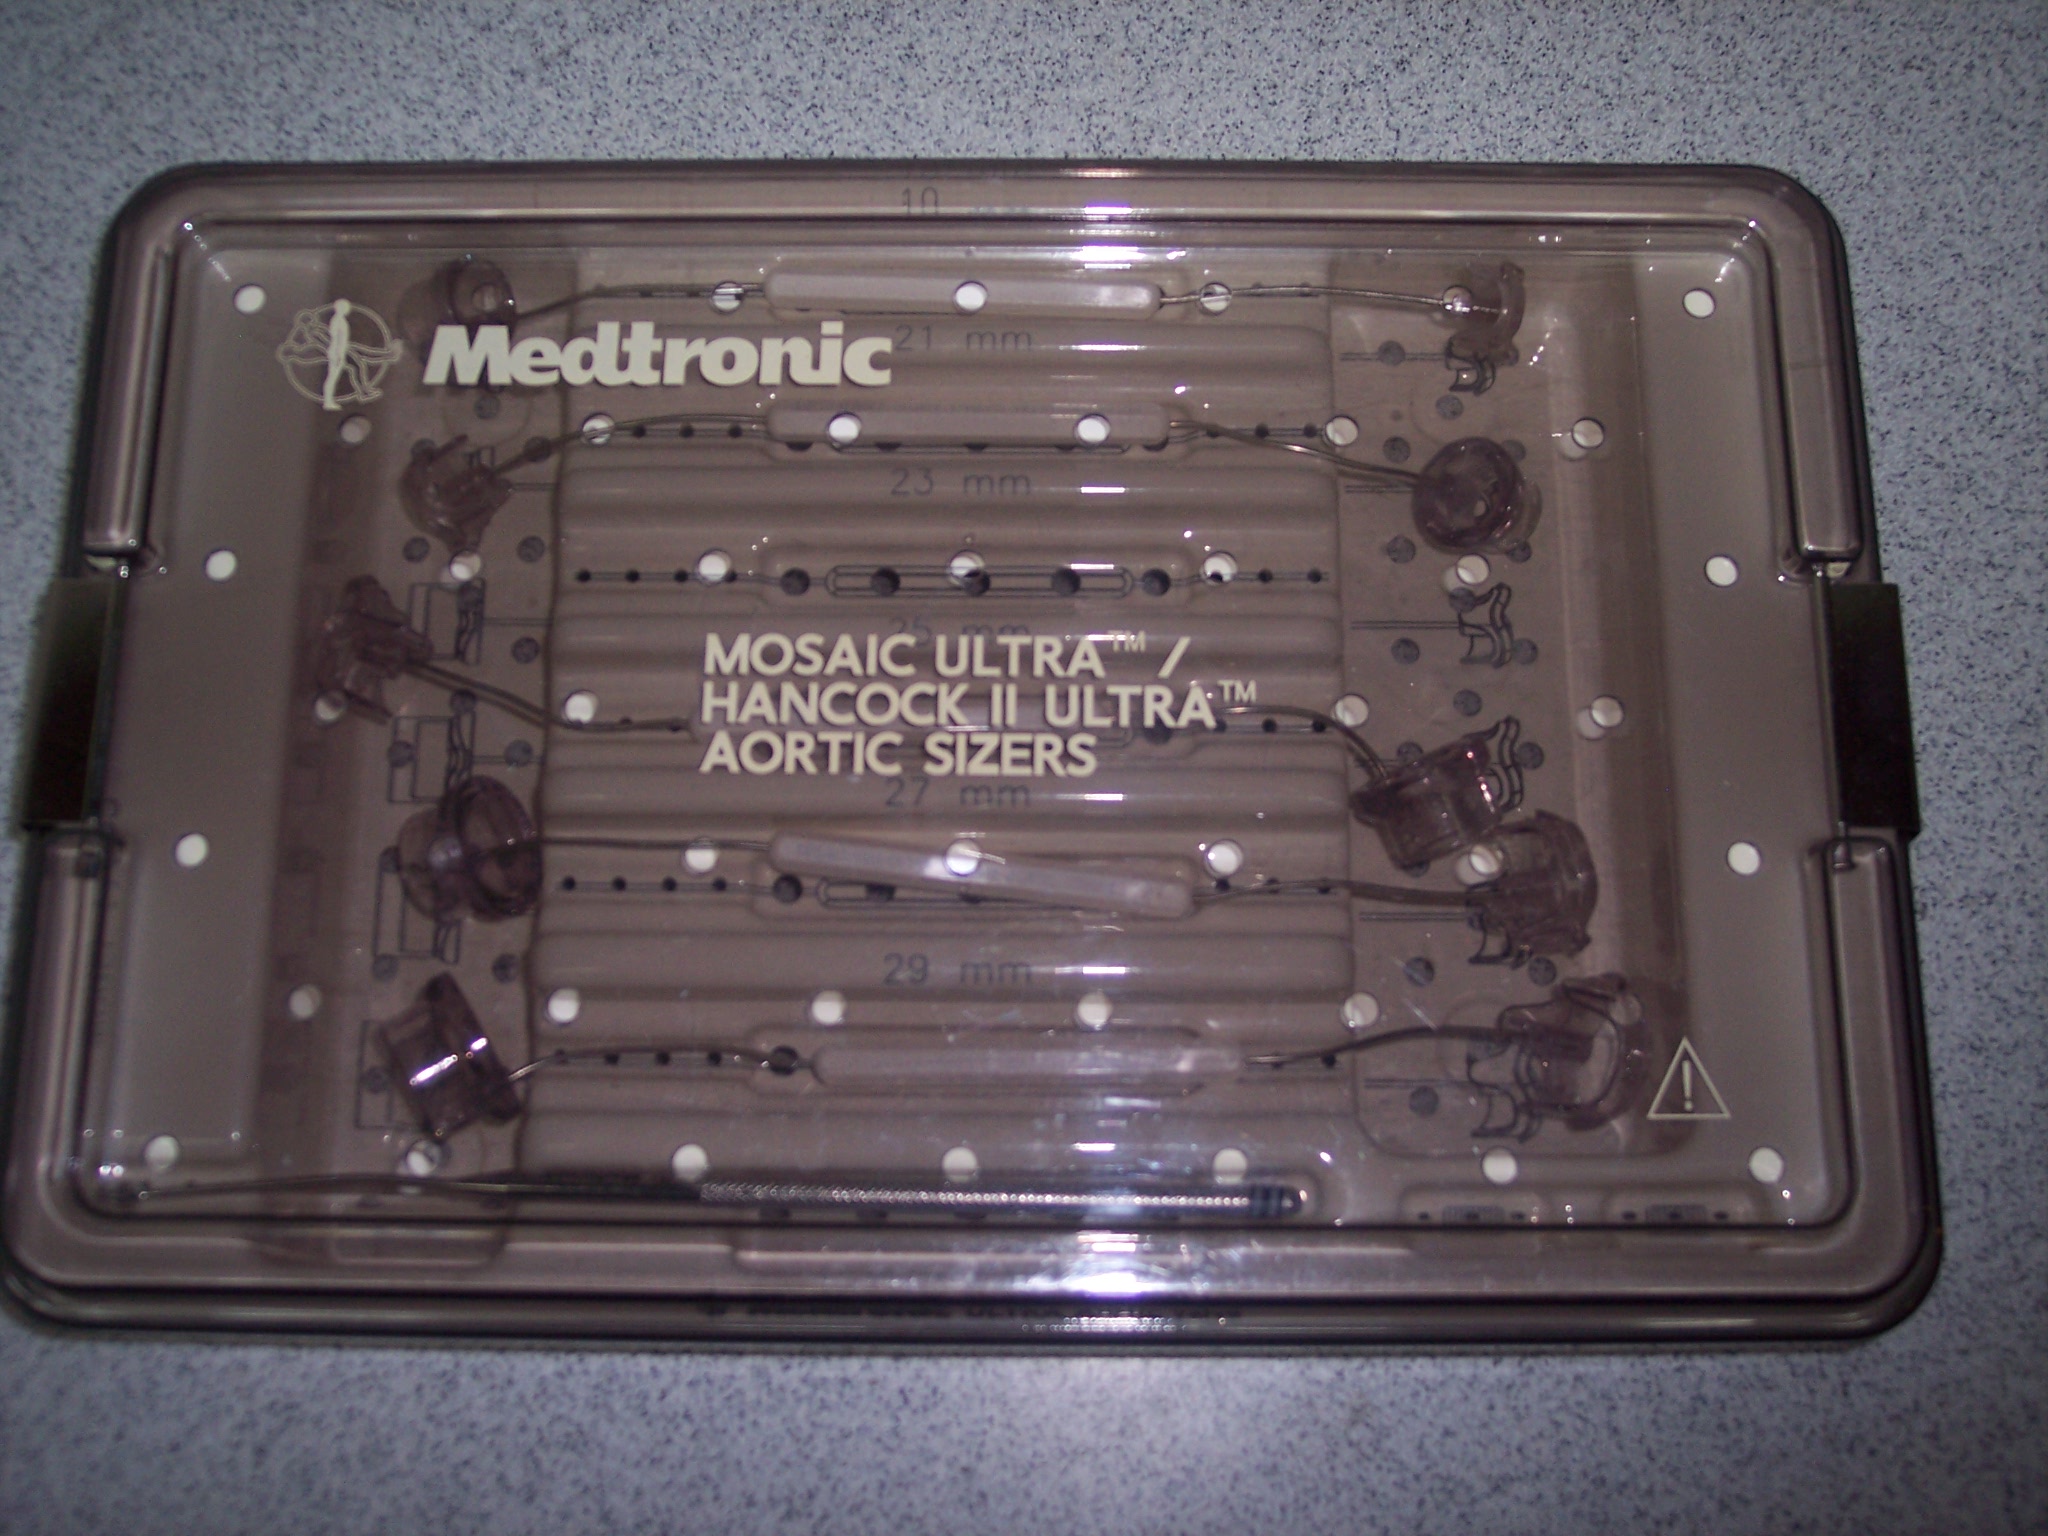 Medtronic T7665 Mosaic Ultra / Hancock I